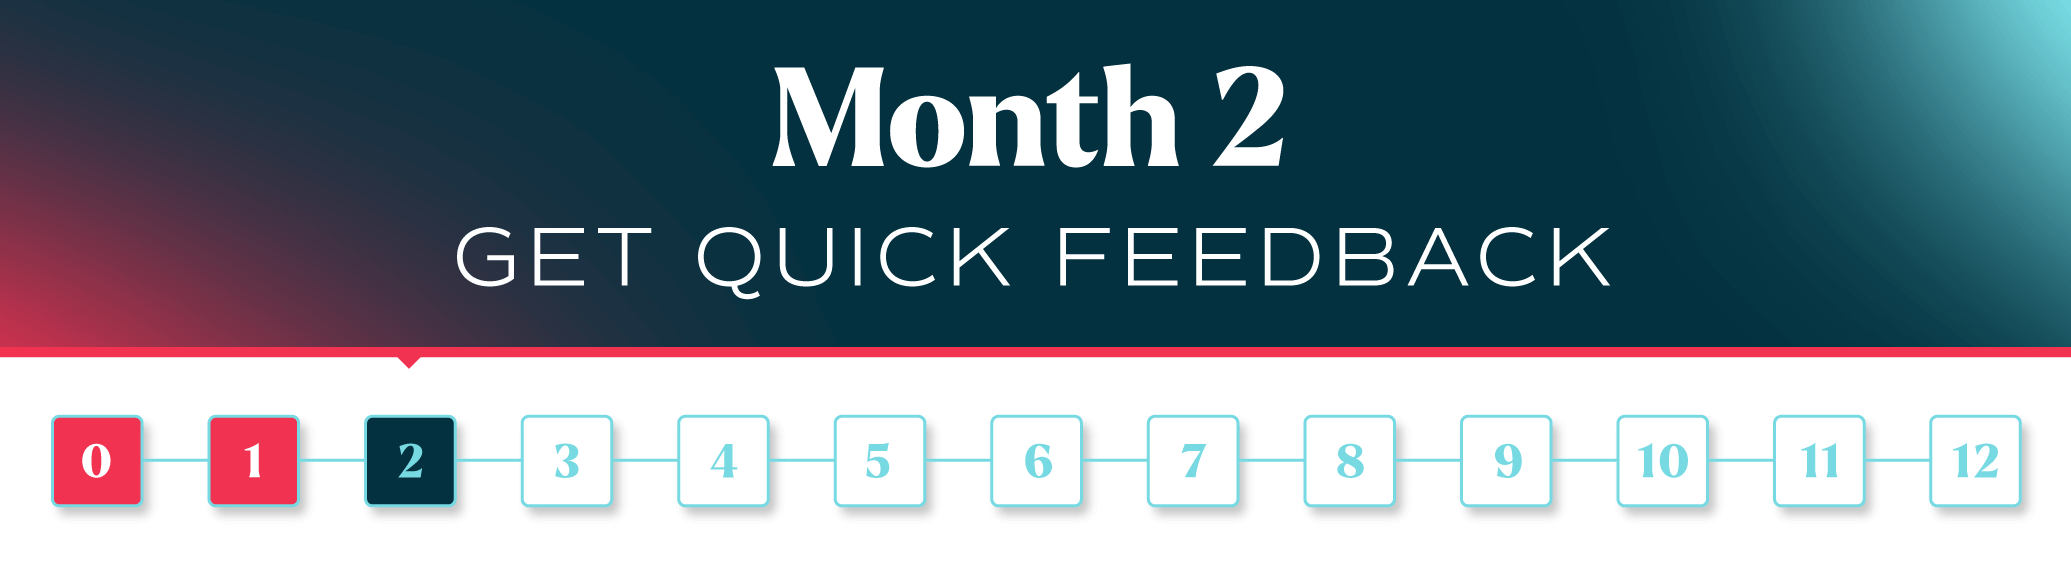 Month 2: Get Quick Feedback